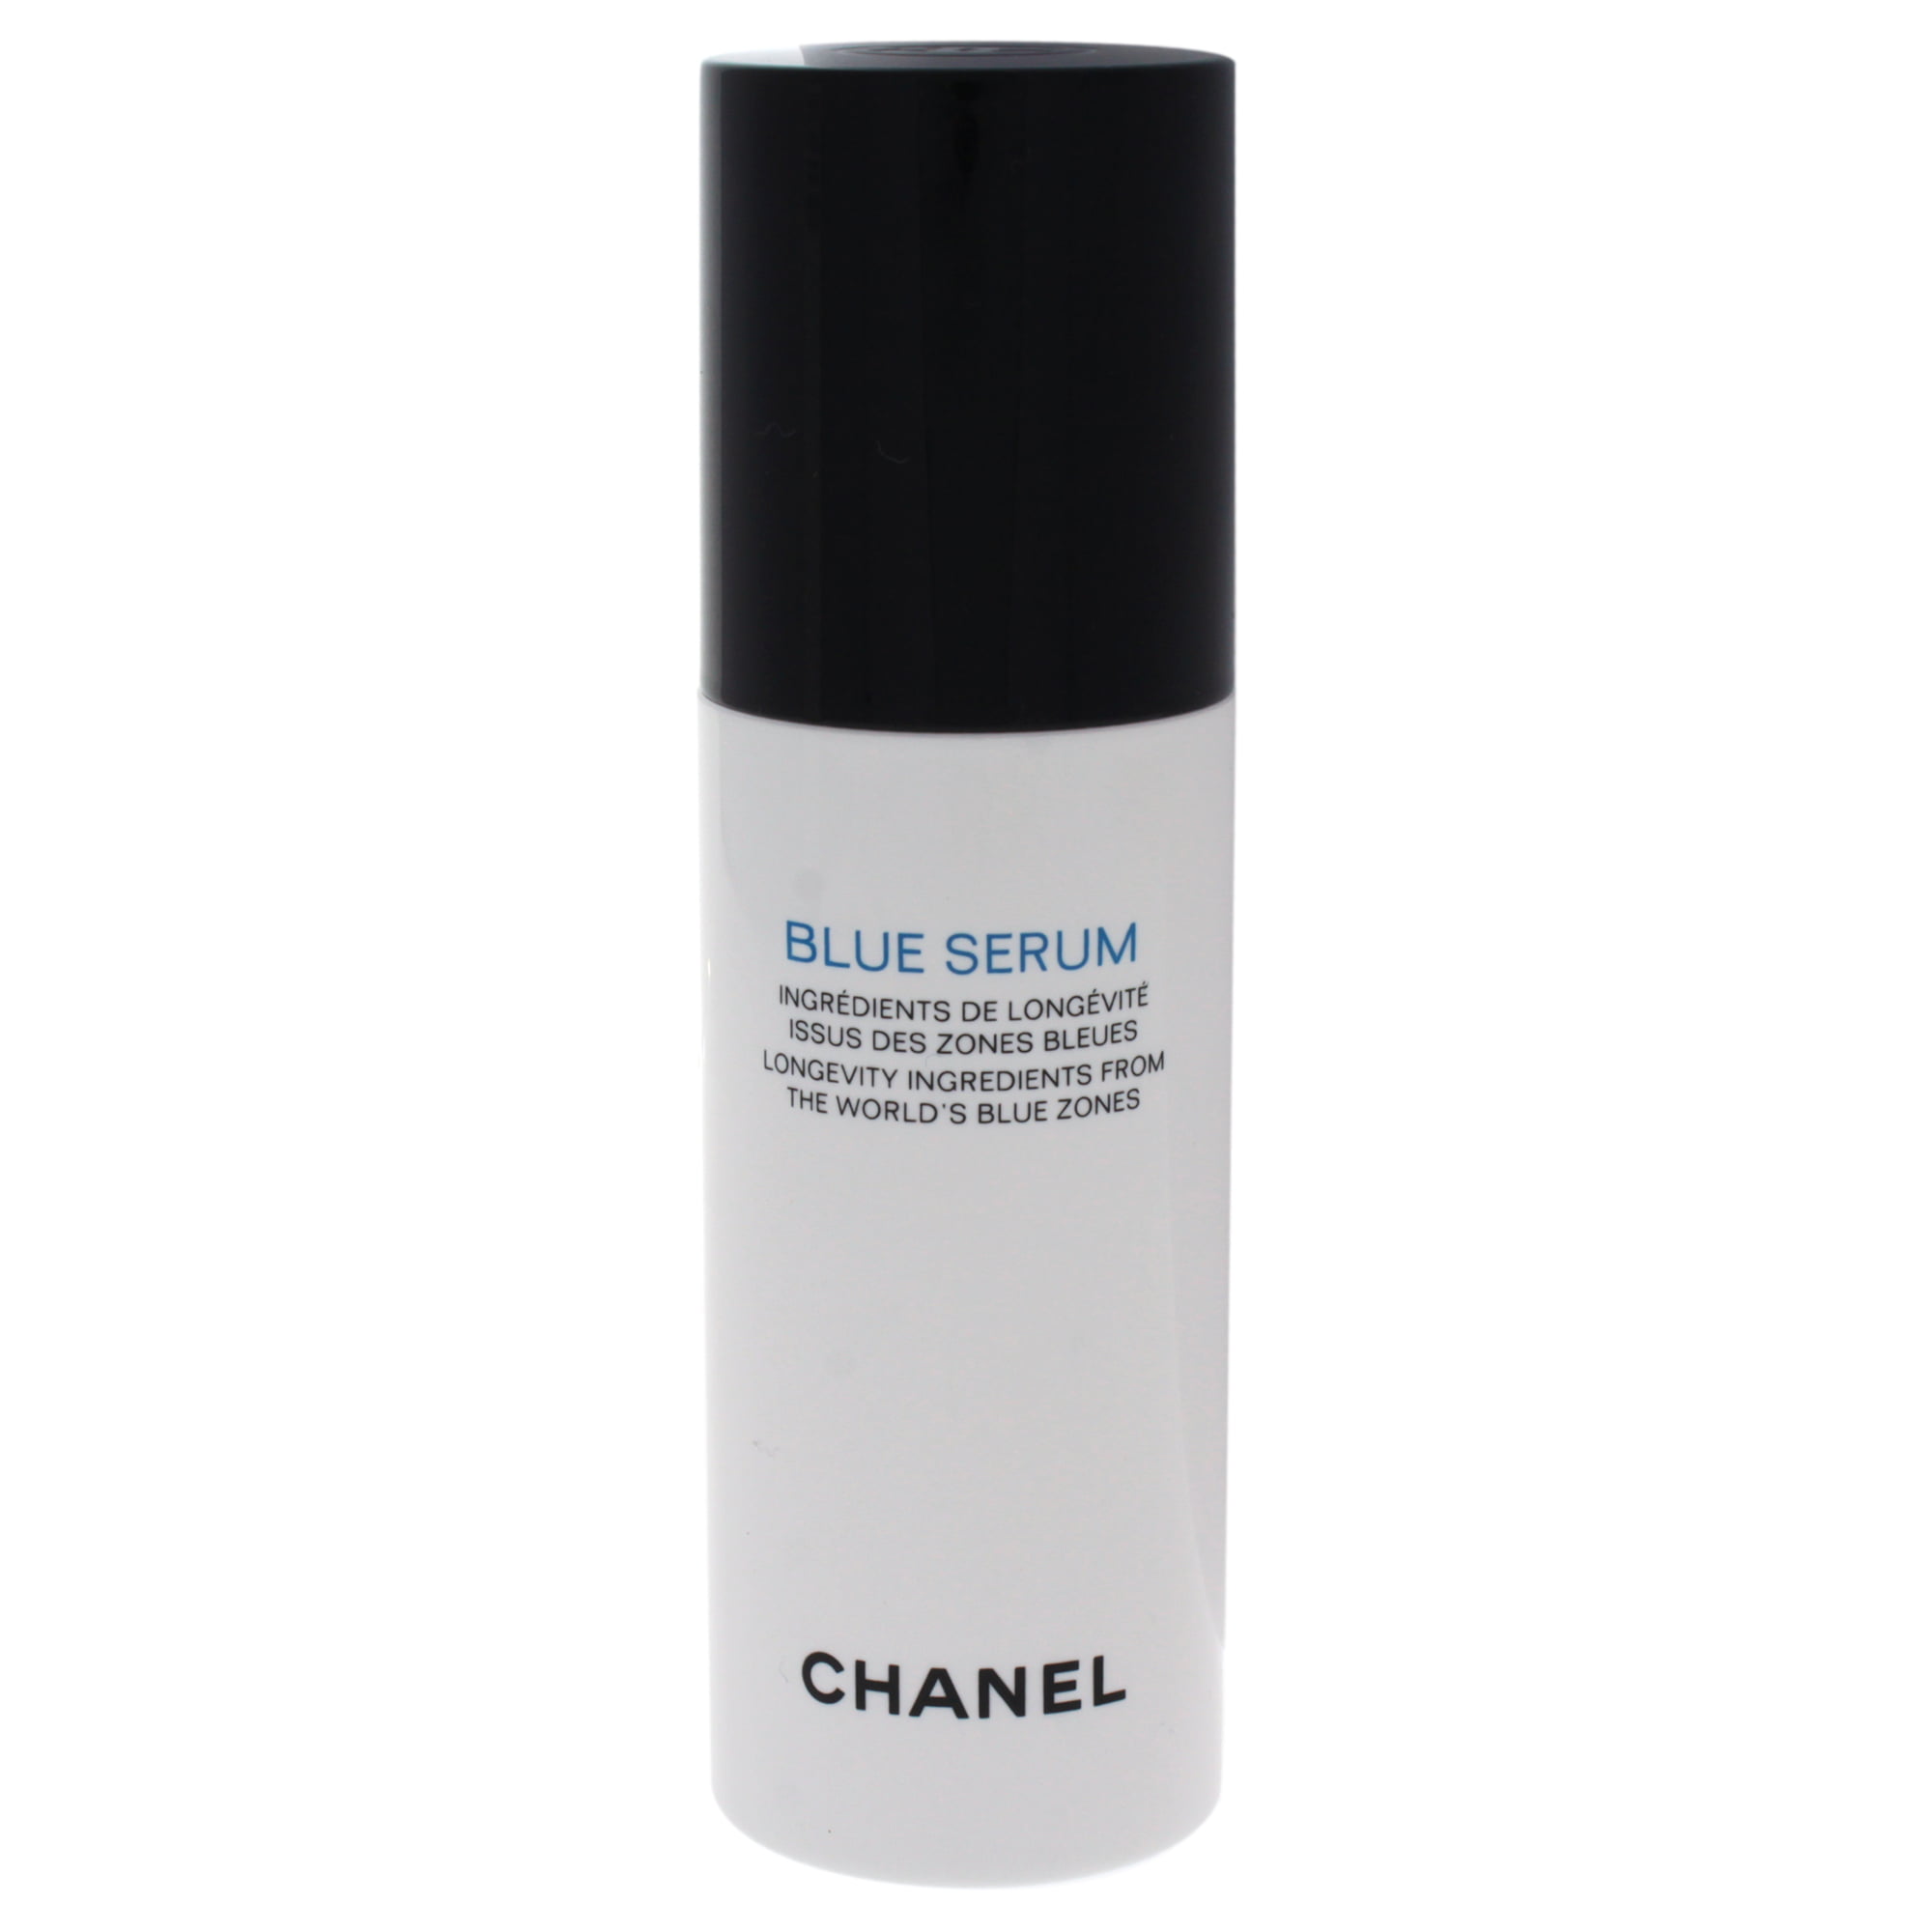 Blue Serum by Chanel for Women - 1 oz Serum